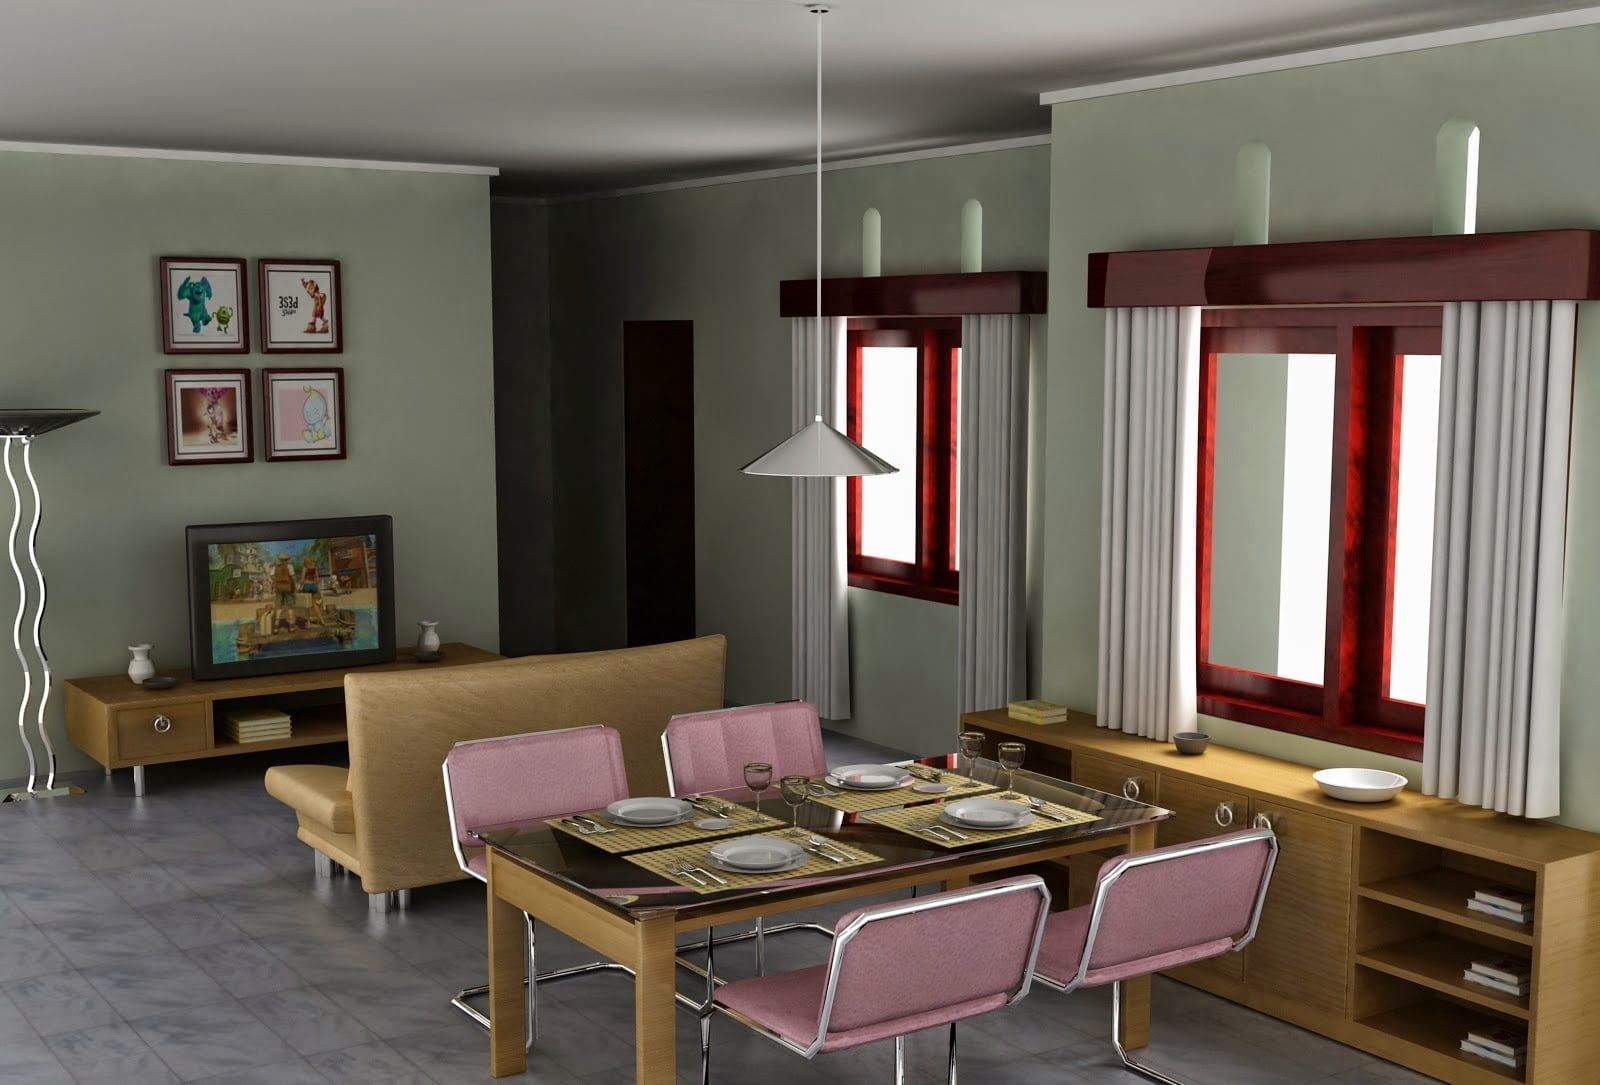 5 Kumpulan Desain Ruangan Rumah Minimalis Sederhana Terbaru dan